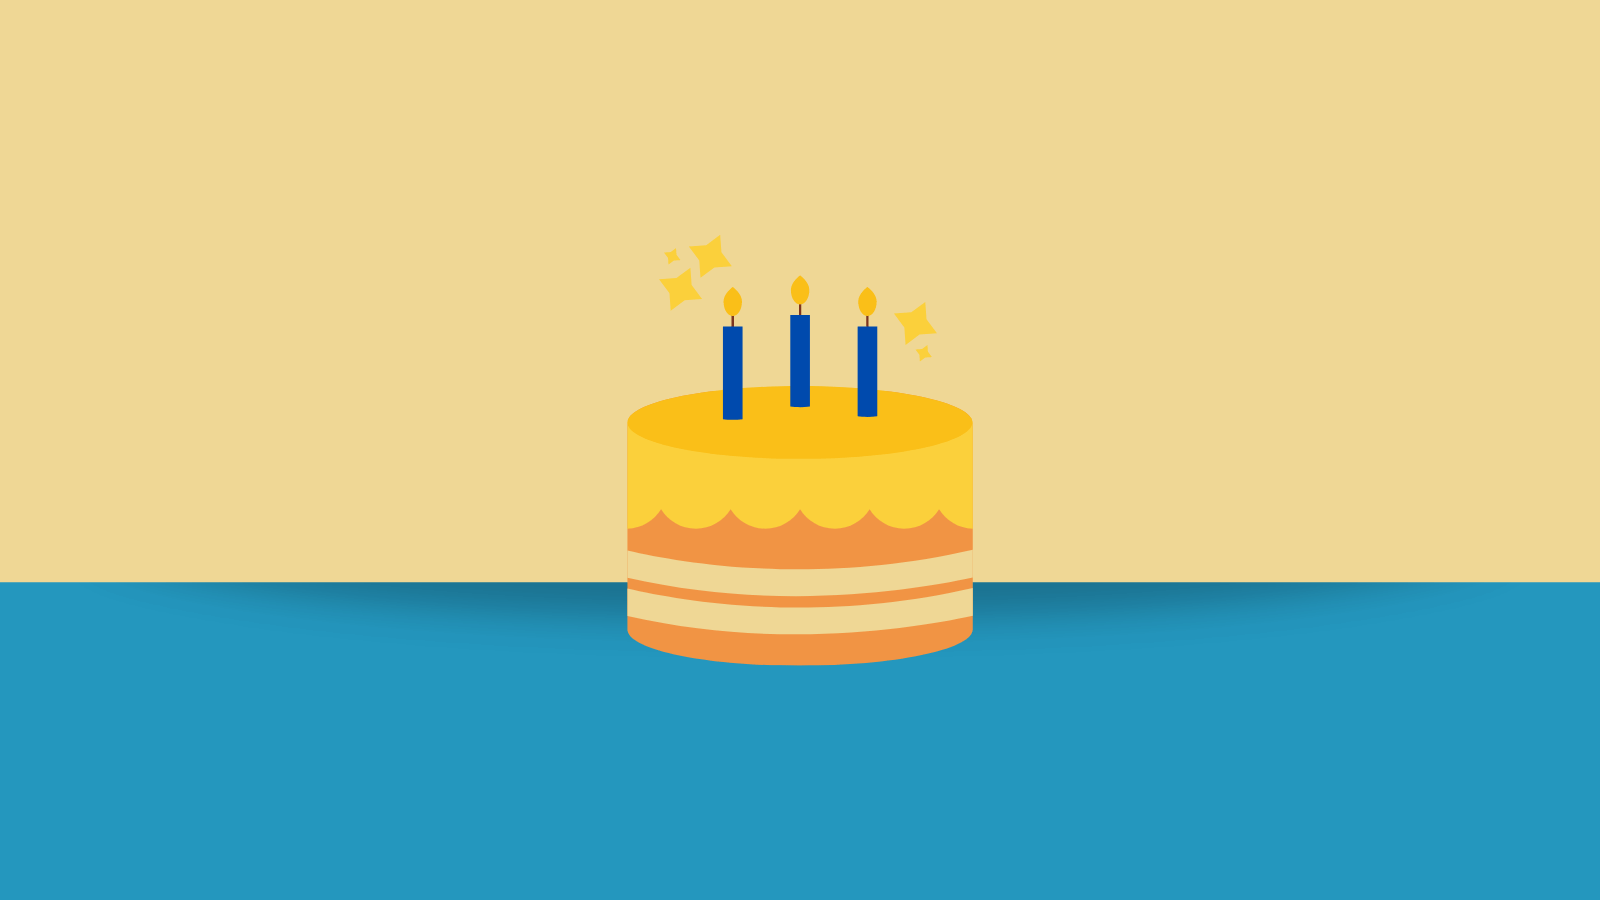 A minimalist graphic of a birthday cake